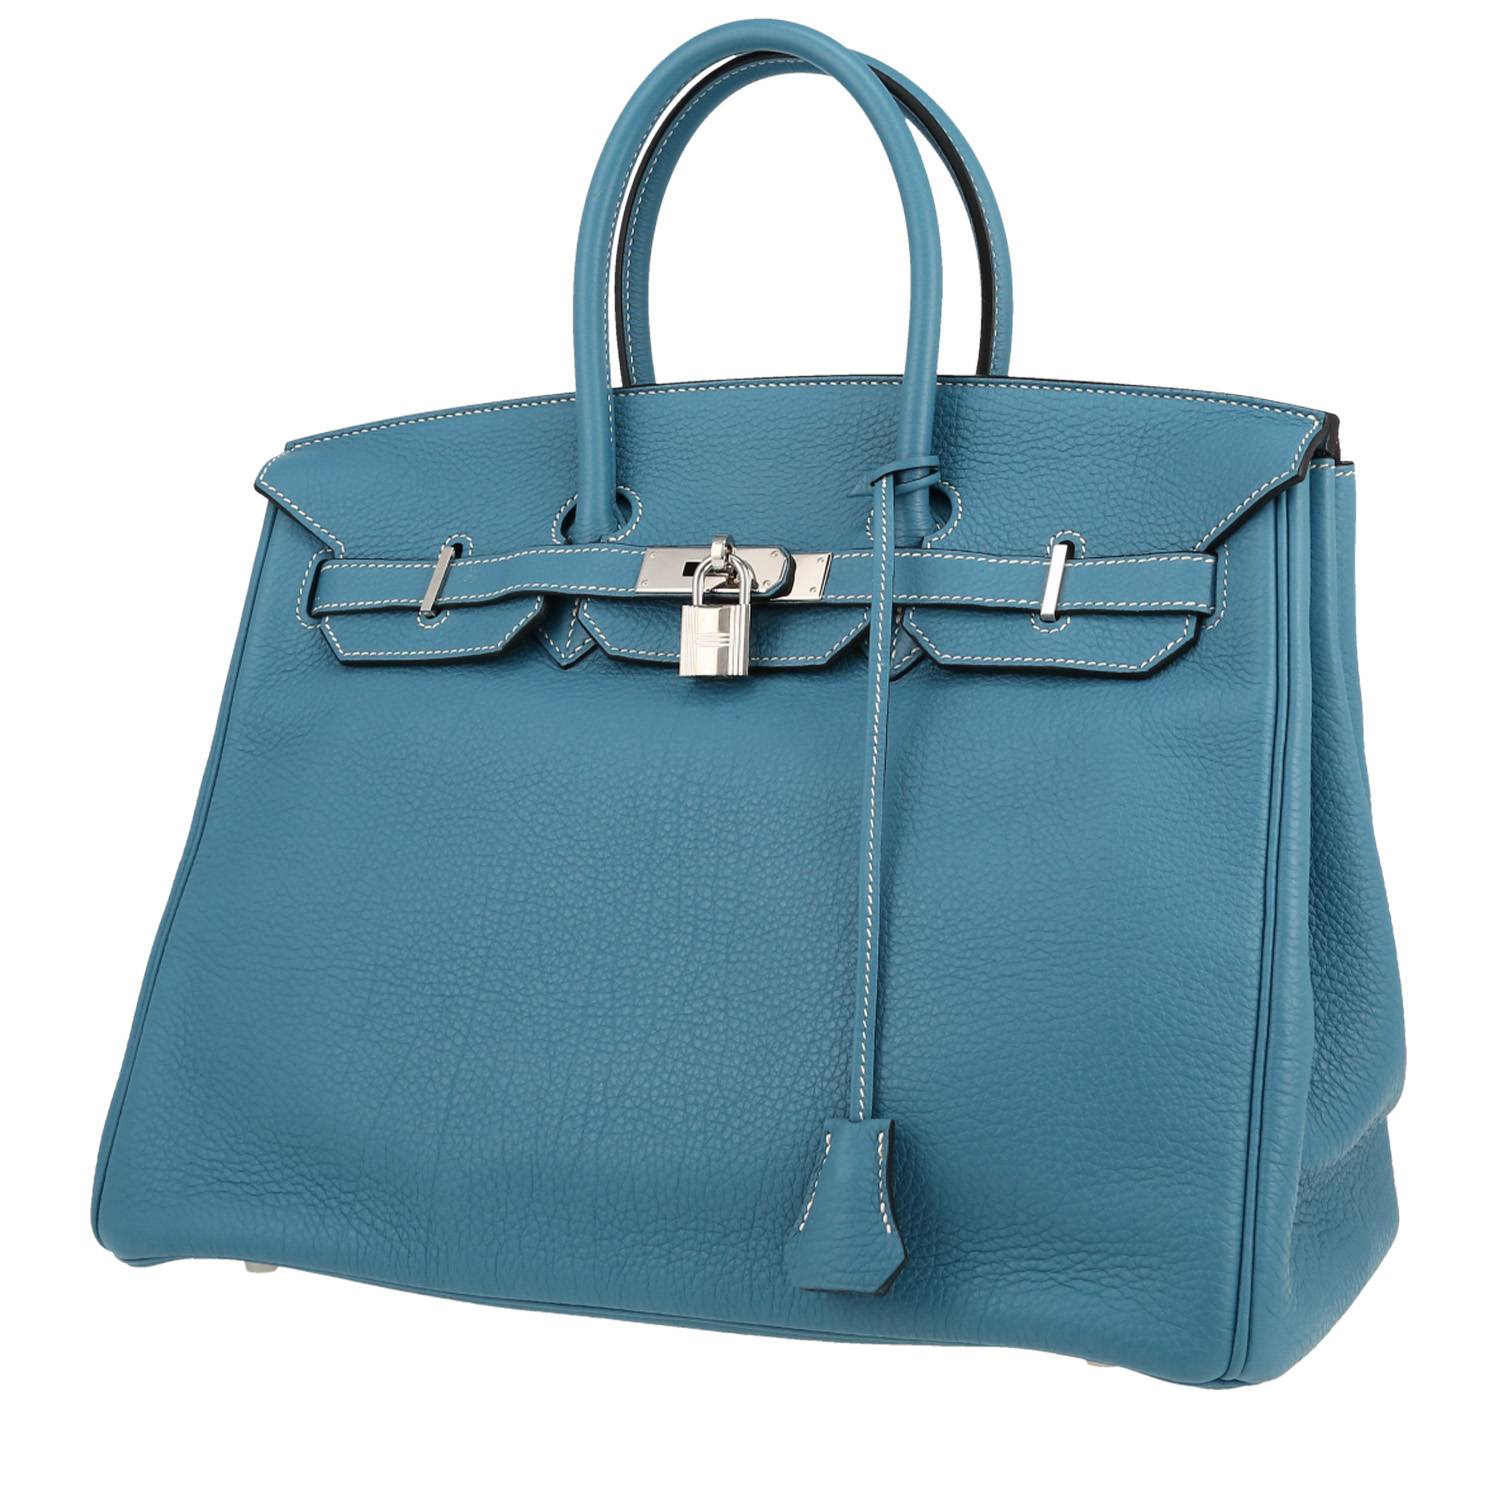 Birkin 35 cm Handbag In Blue Jean Togo Leather